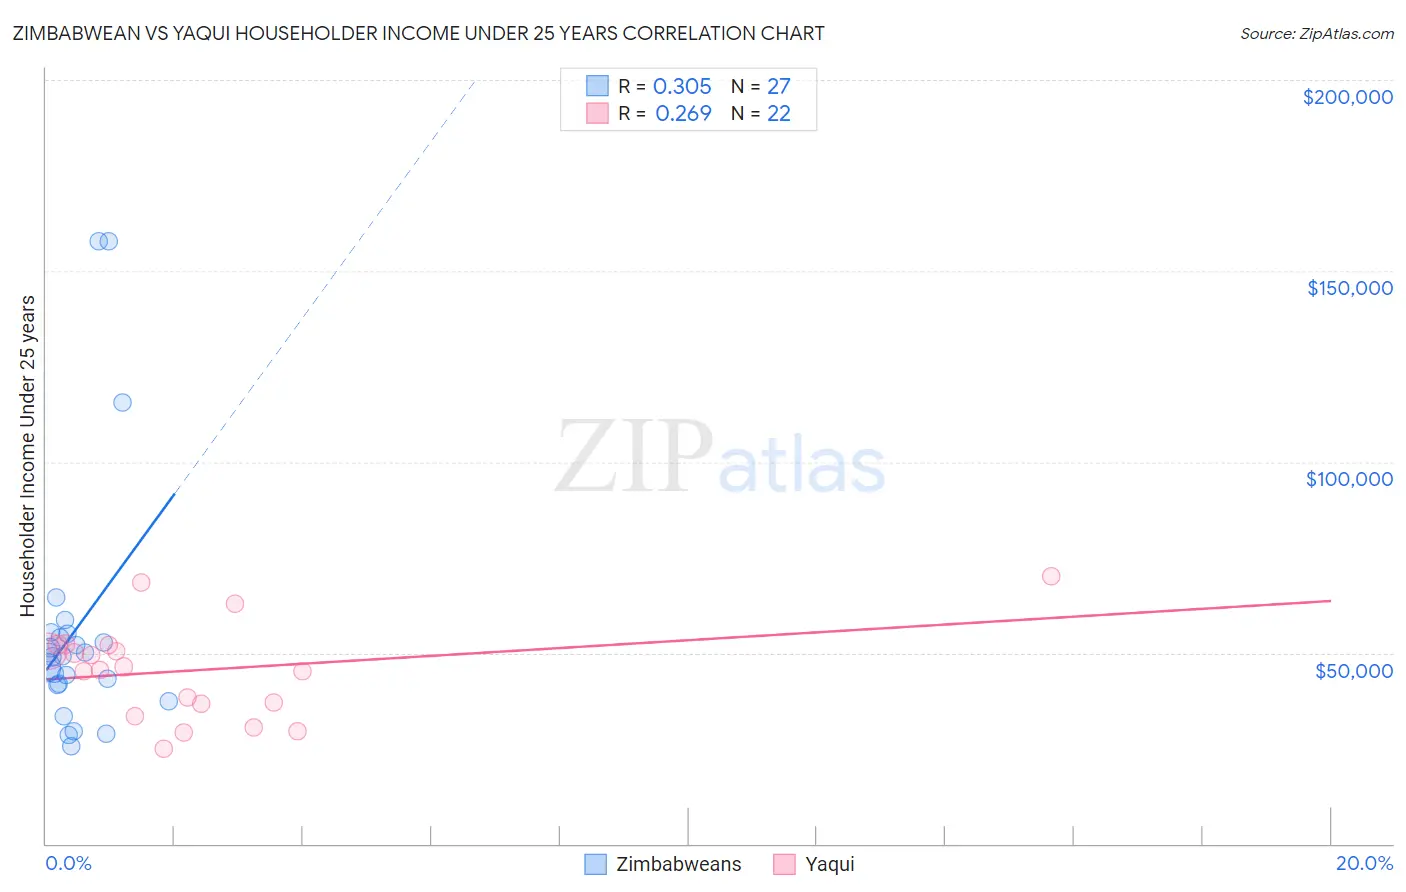 Zimbabwean vs Yaqui Householder Income Under 25 years